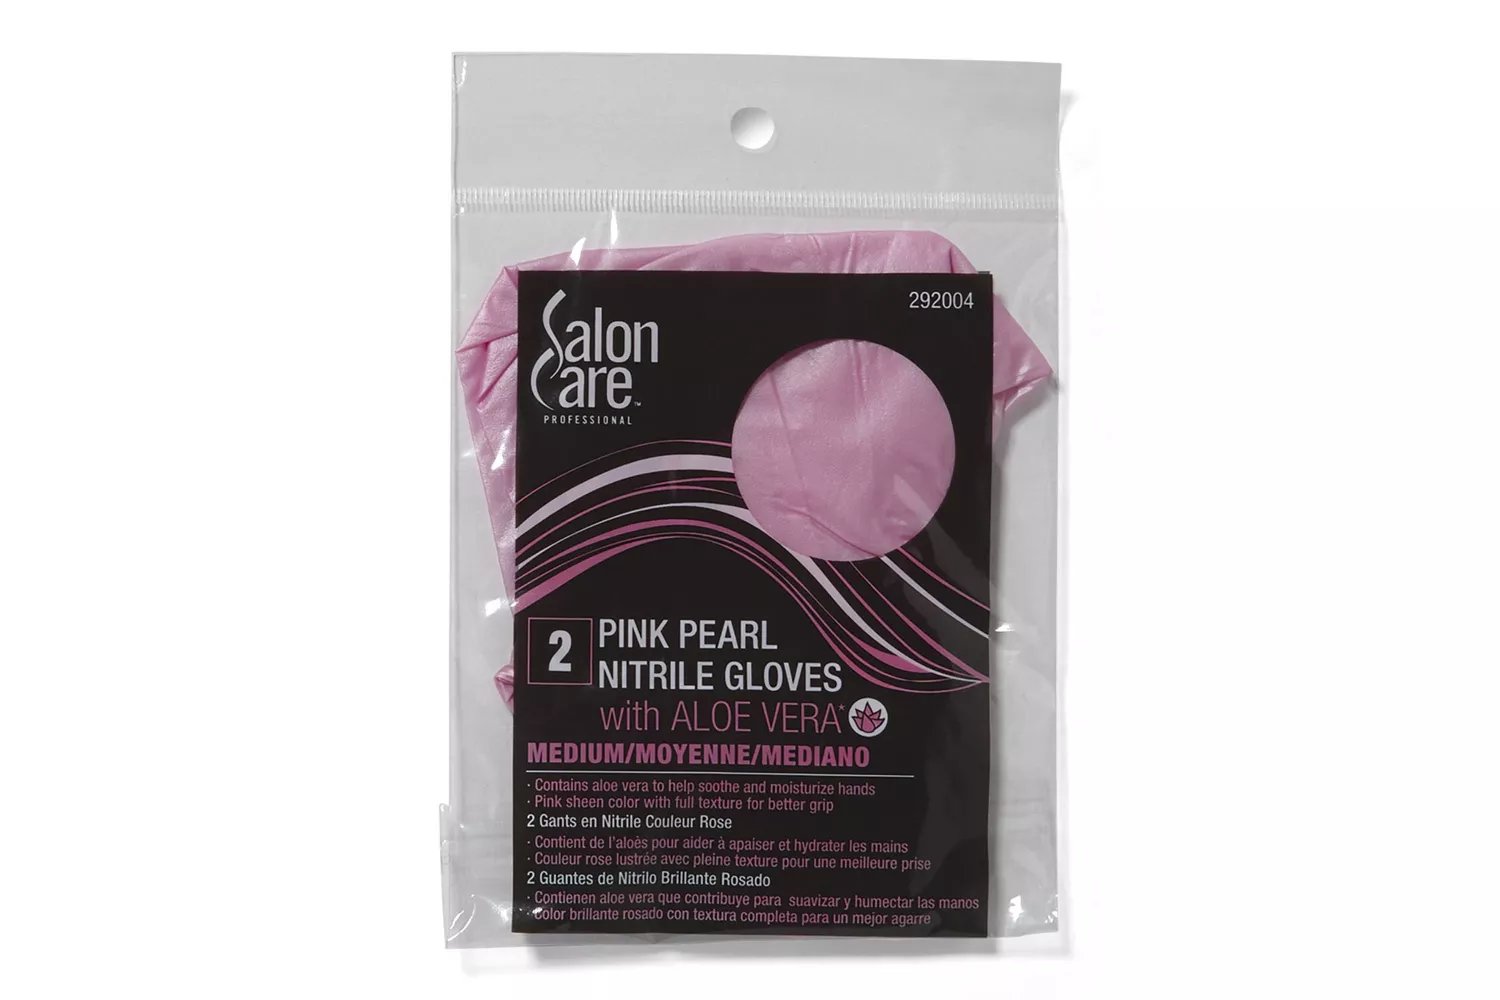 Salon Care Pink Pearl Nitrile Gloves With Aloe Vera